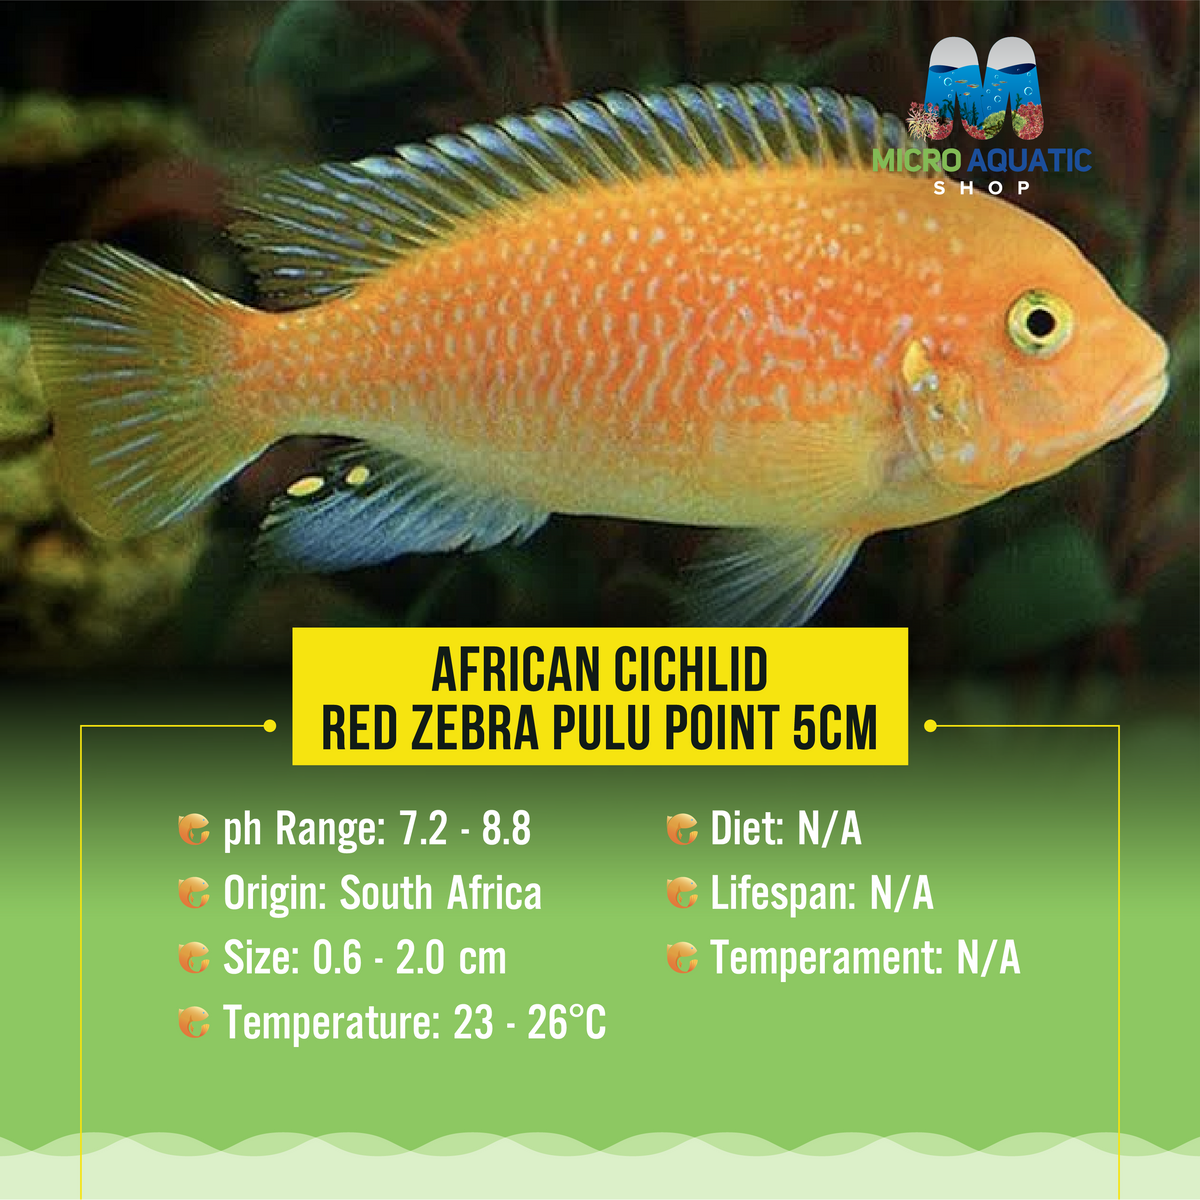 African Cichlid – Red Zebra Pulu Point 5cm